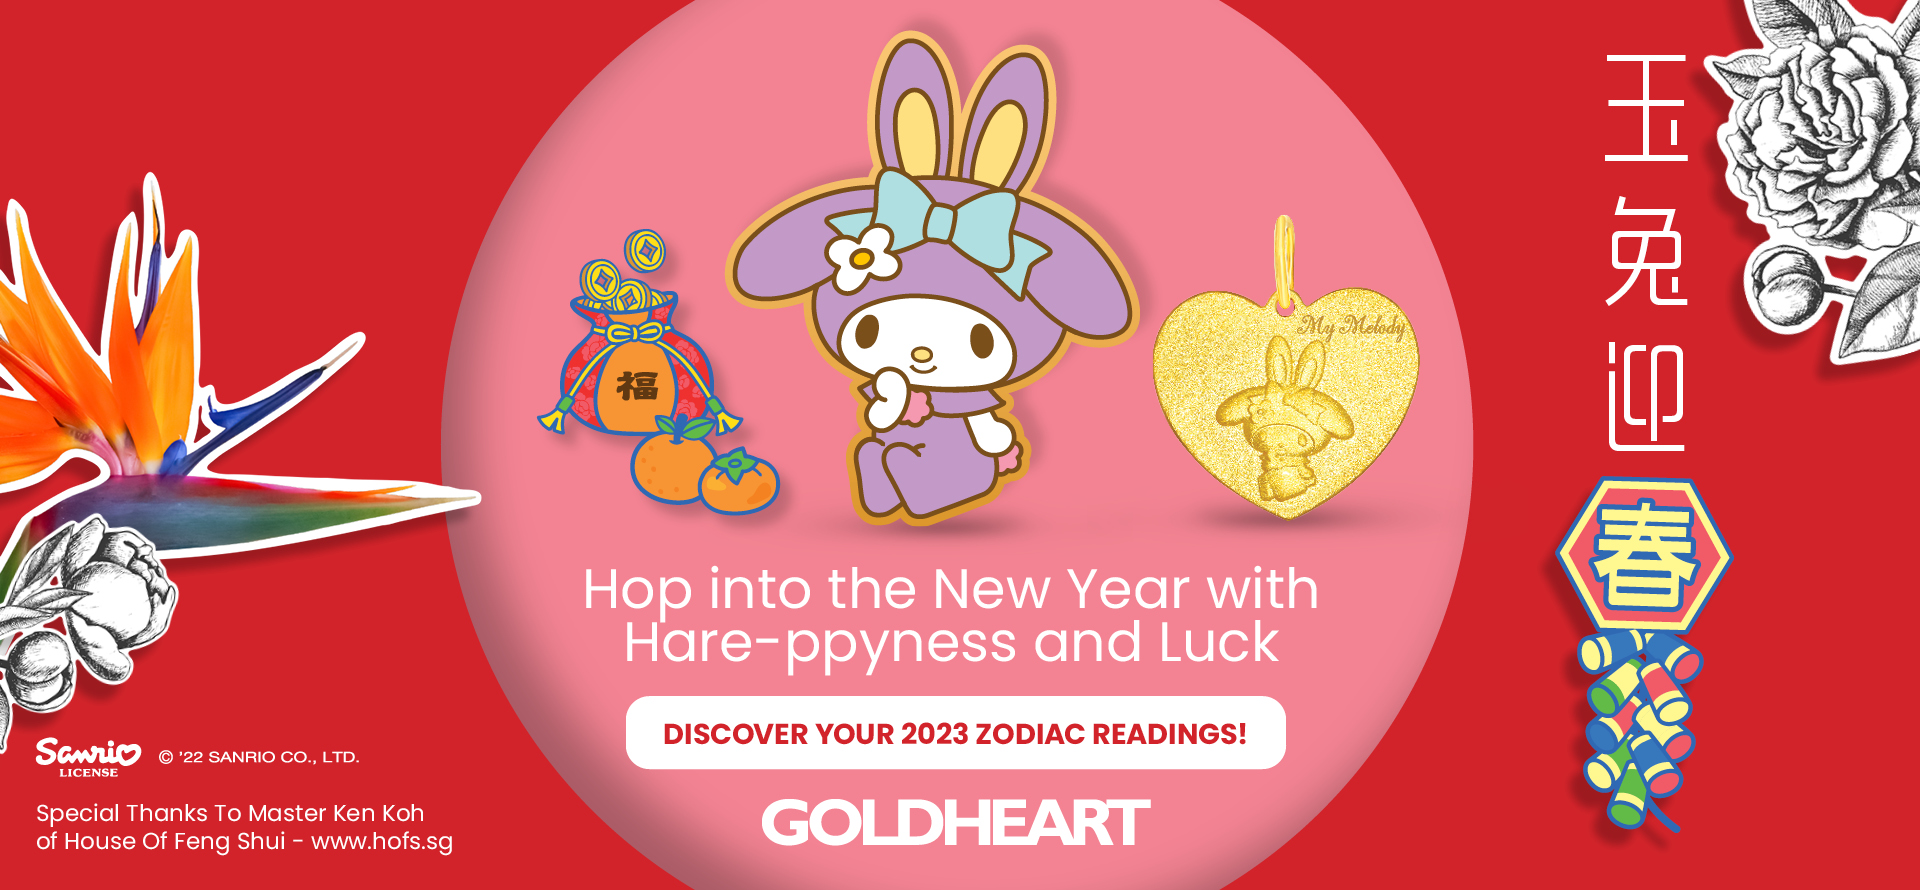 2023 Zodiac Readings